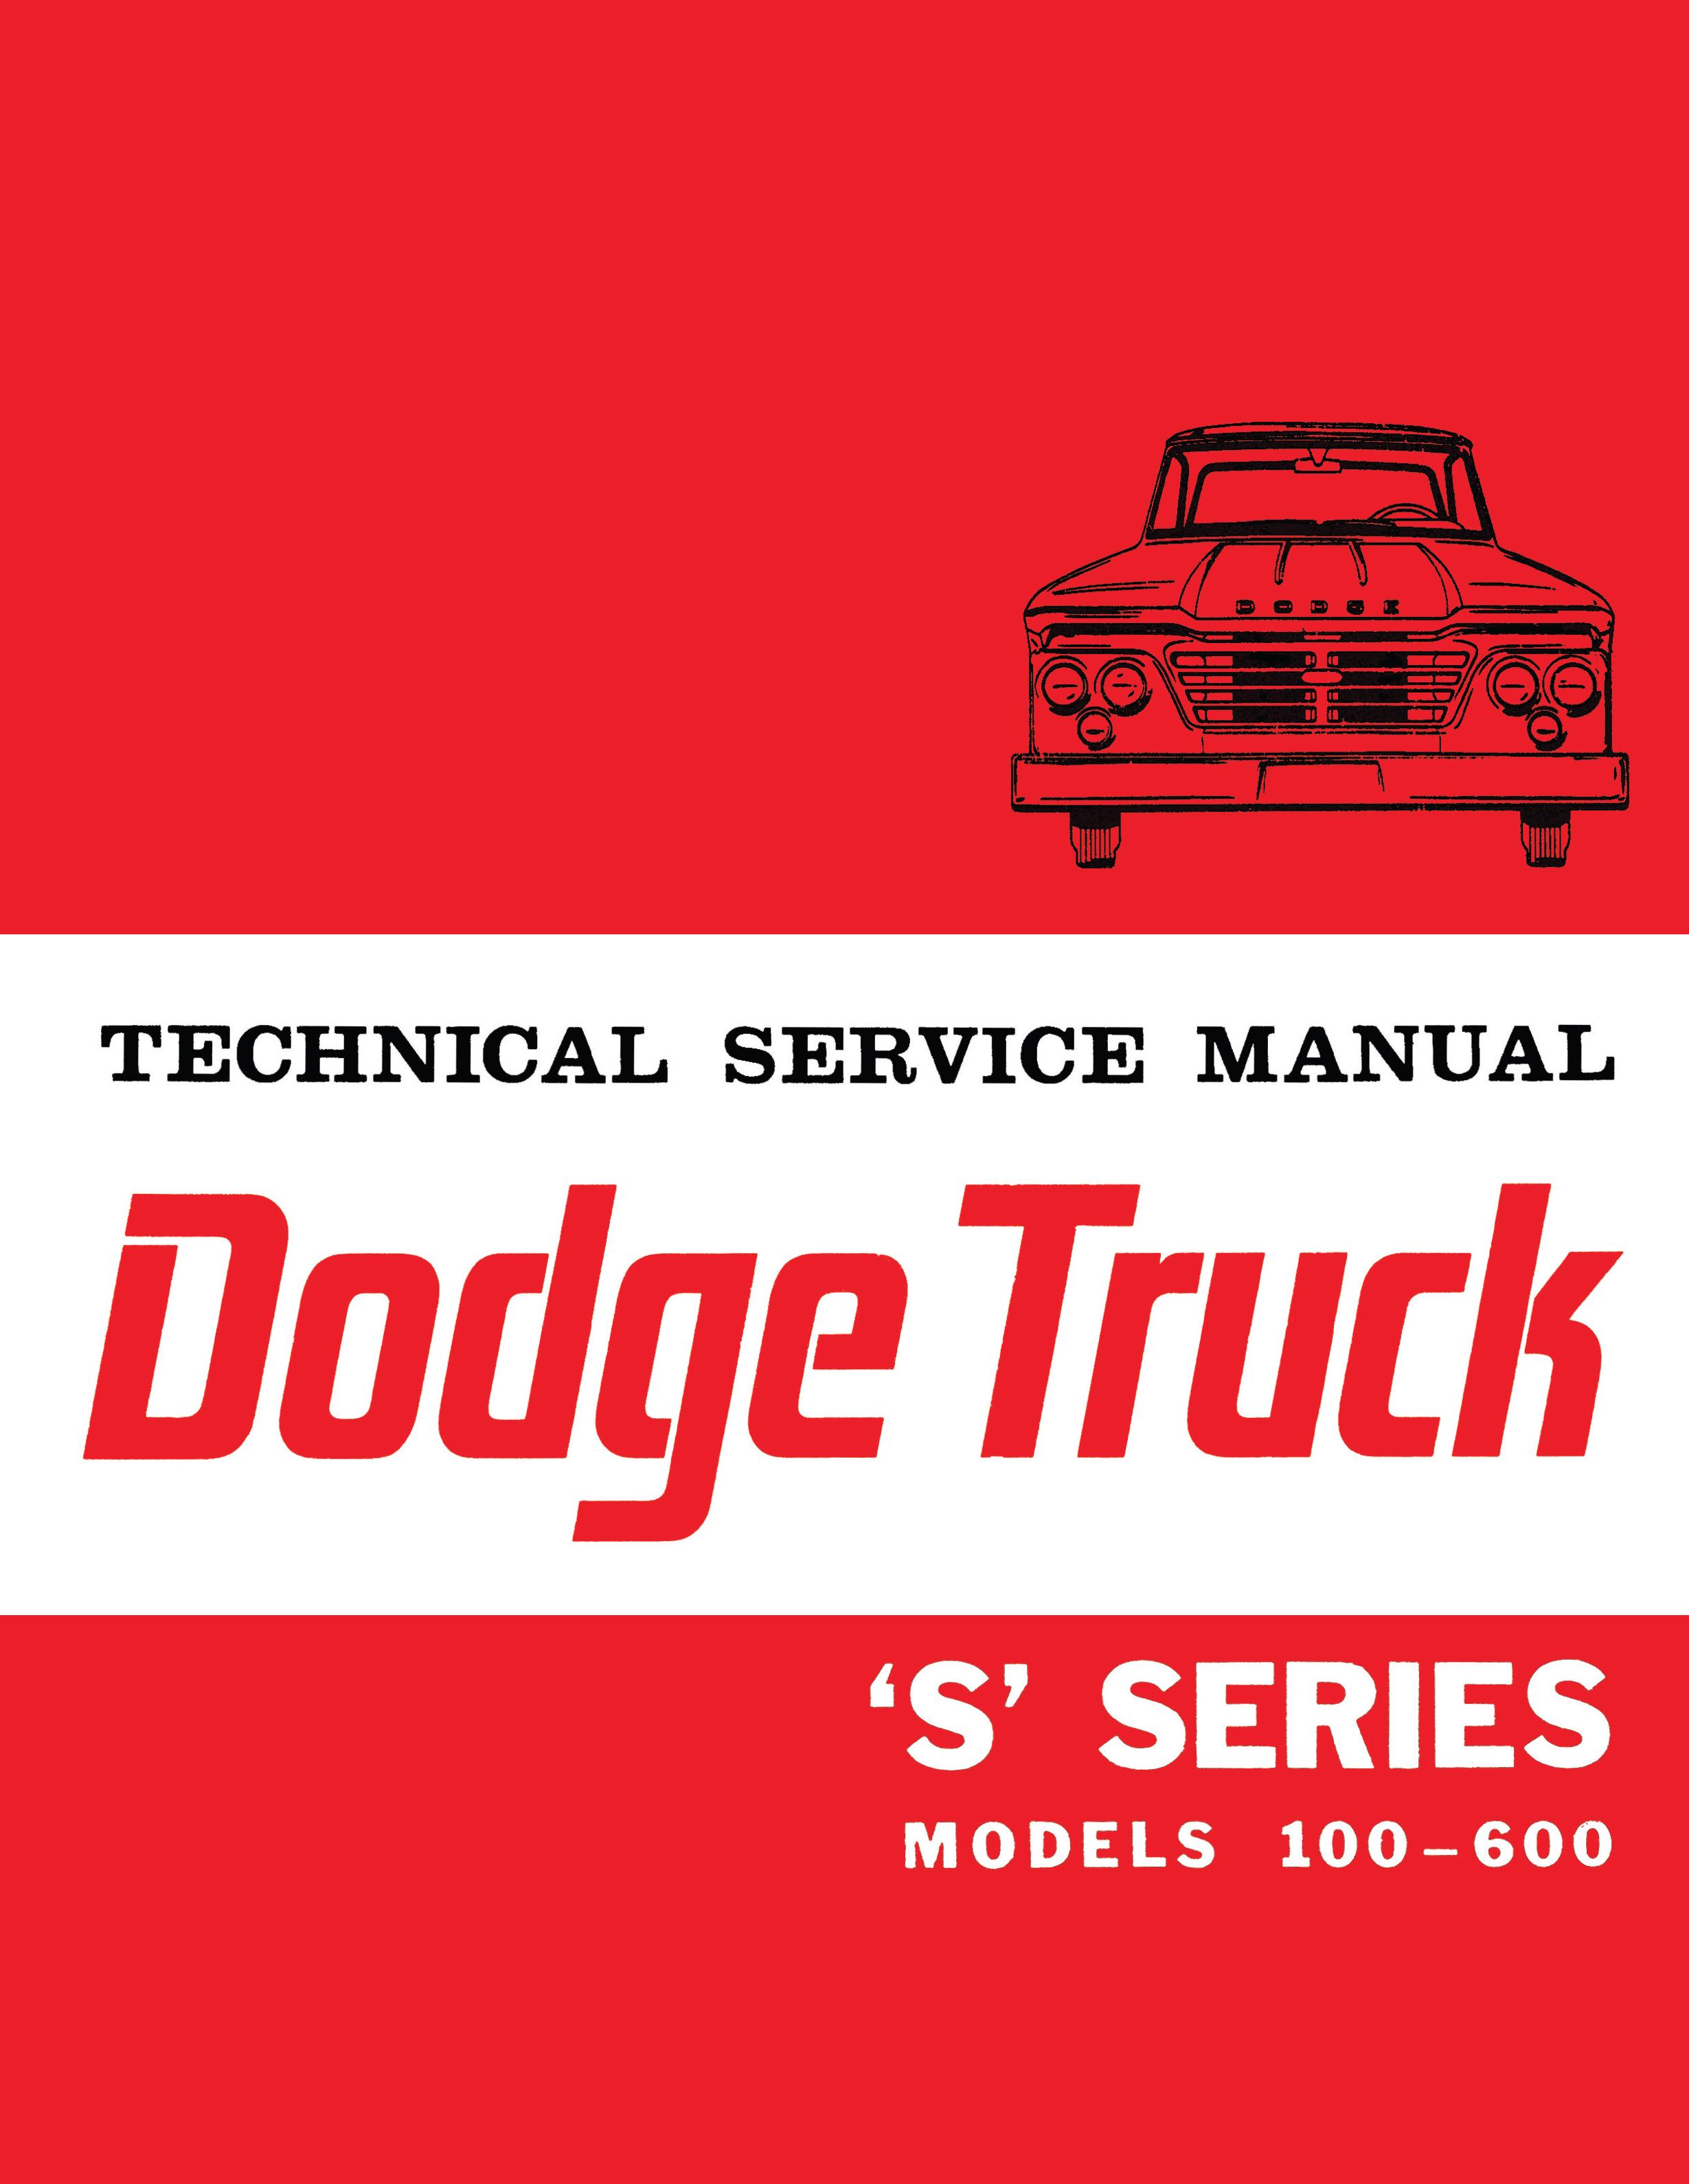 1964 Dodge Truck 100-600 S Series Shop Manual